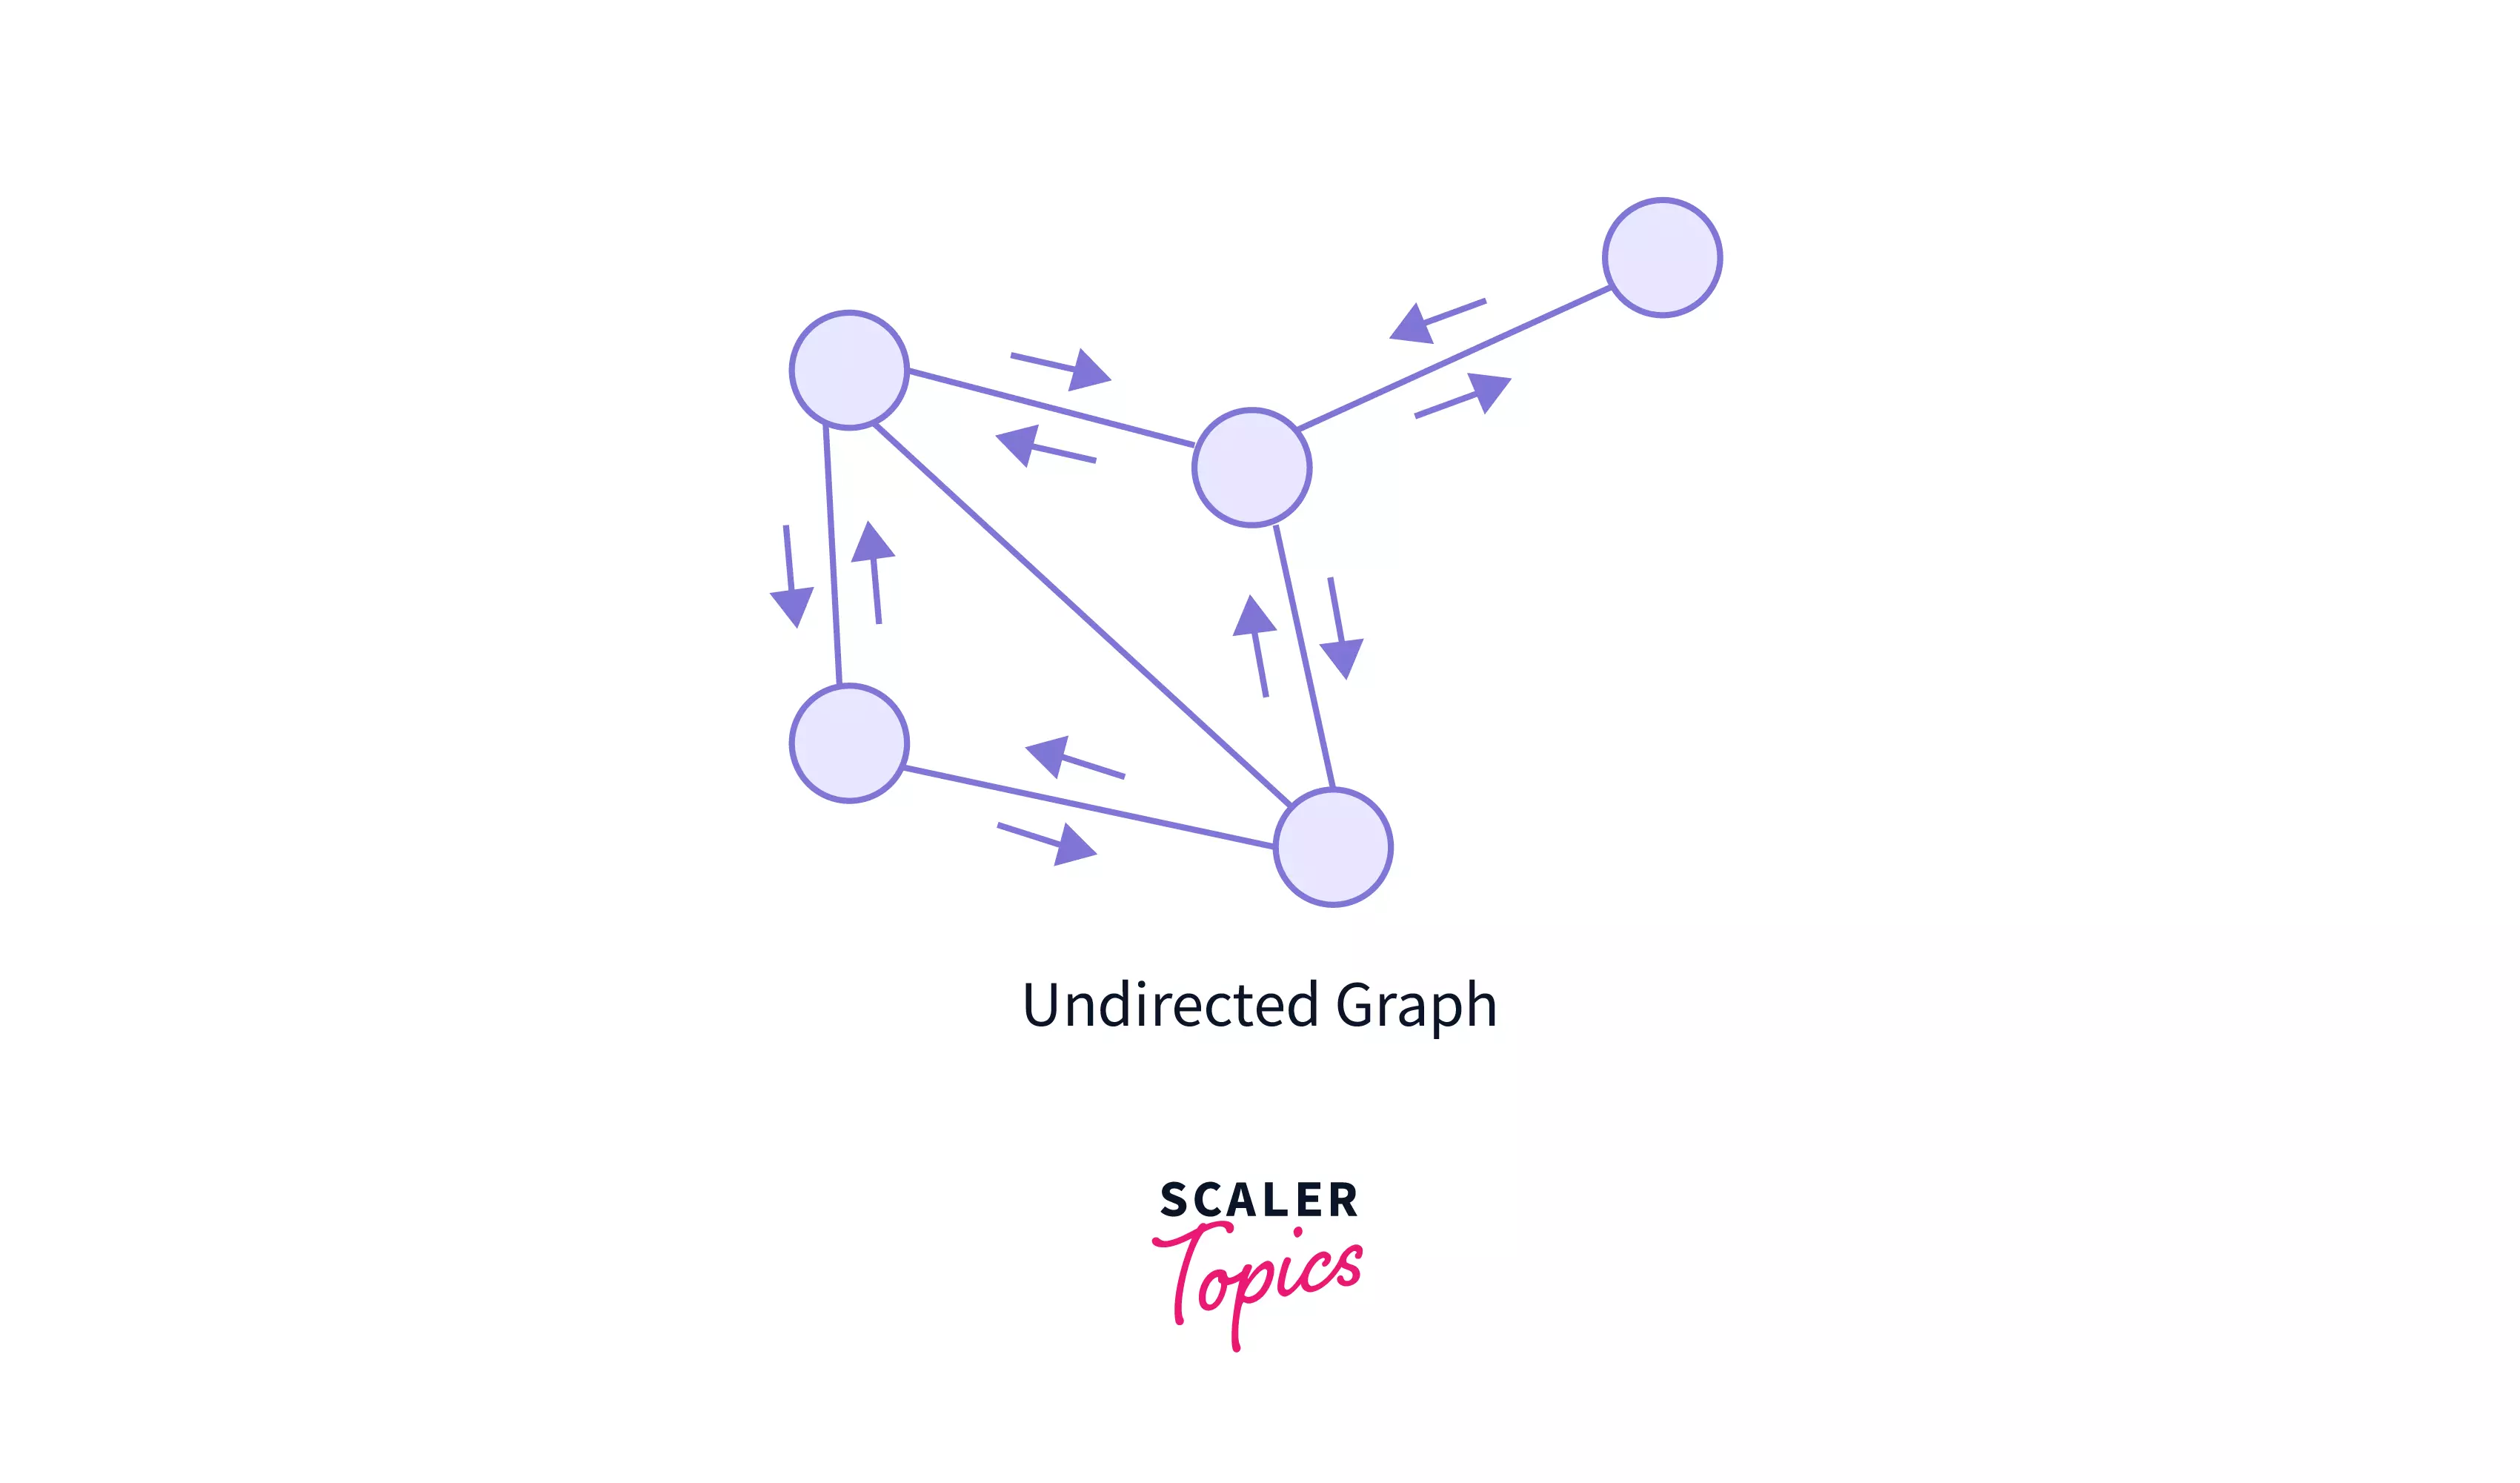 Undirected Graphs